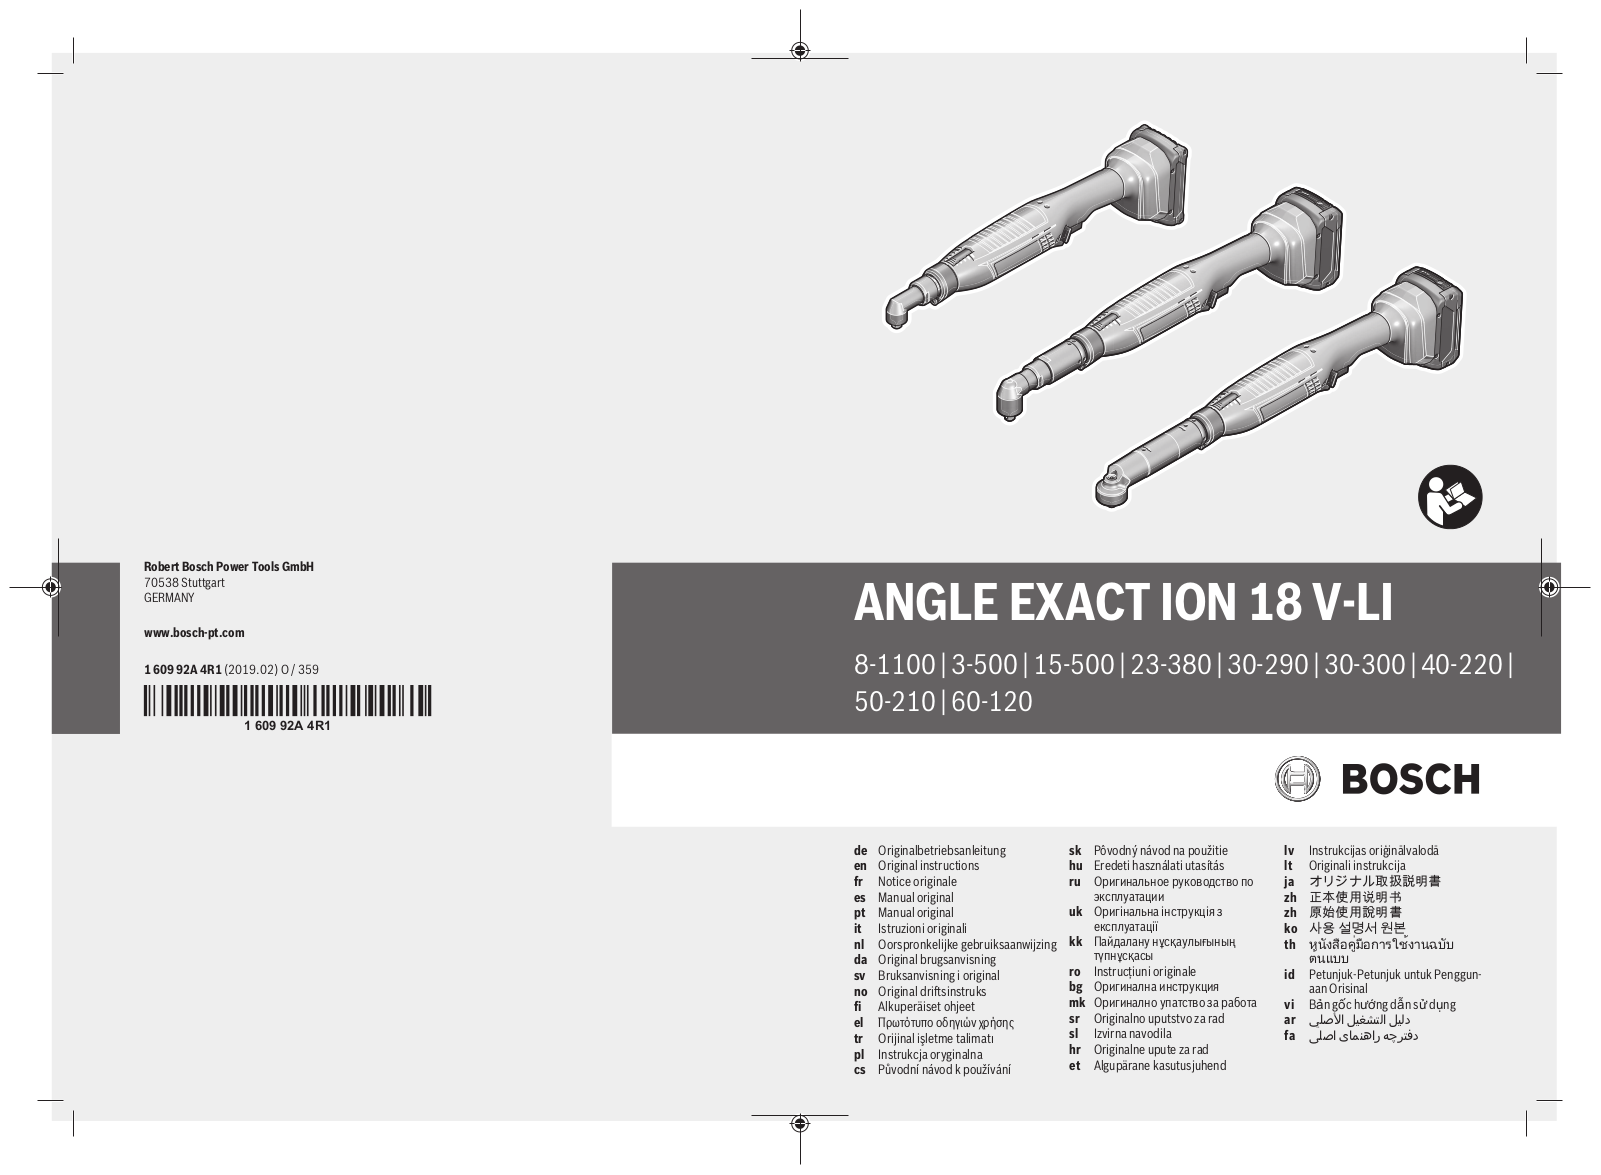 Bosch ANGLE EXACT ION 18 V-LI 8-1100, ANGLE EXACT ION 18 V-LI 3-500, ANGLE EXACT ION 18 V-LI 15-500, ANGLE EXACT ION 18 V-LI 23-380, ANGLE EXACT ION 18 V-LI 30-290 User Manual